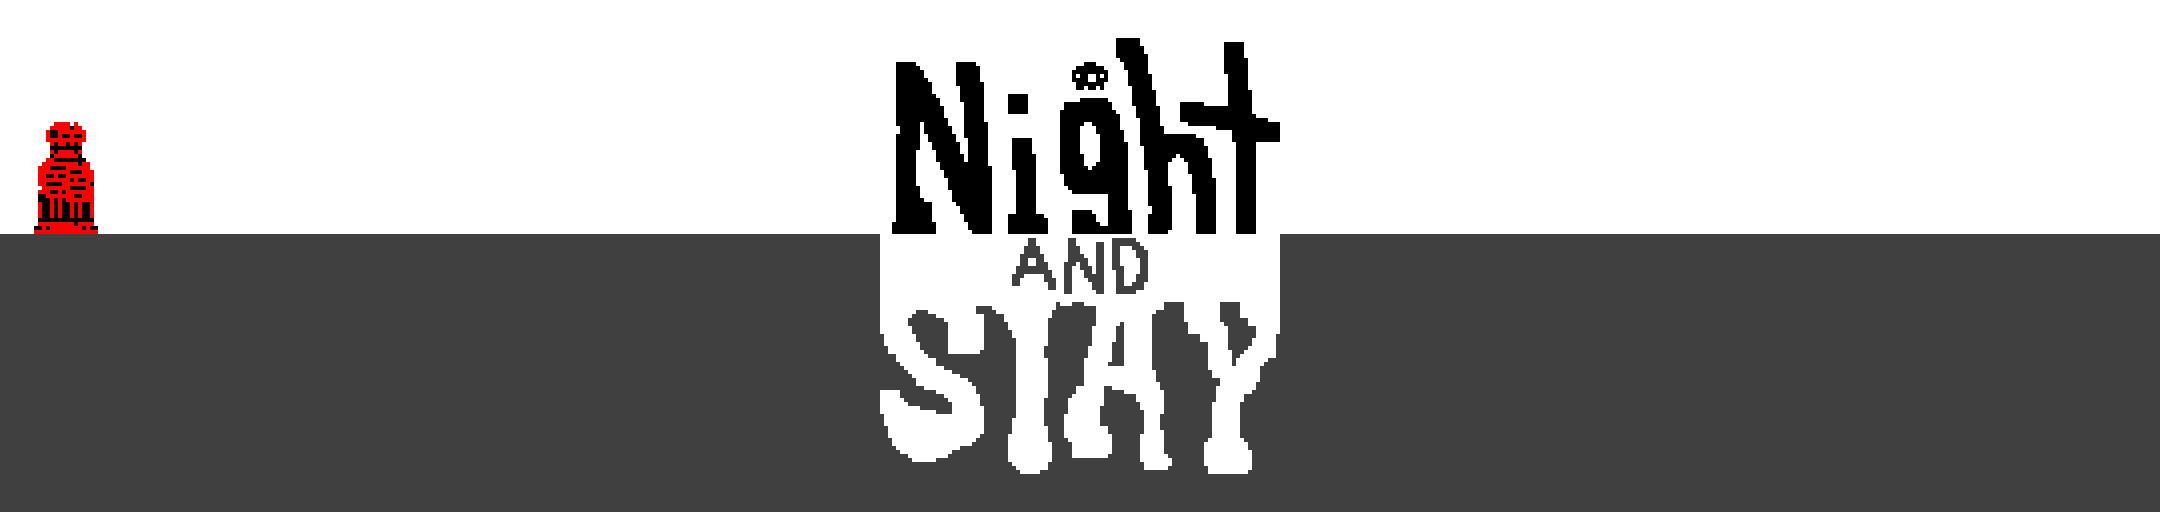 Night and Slay